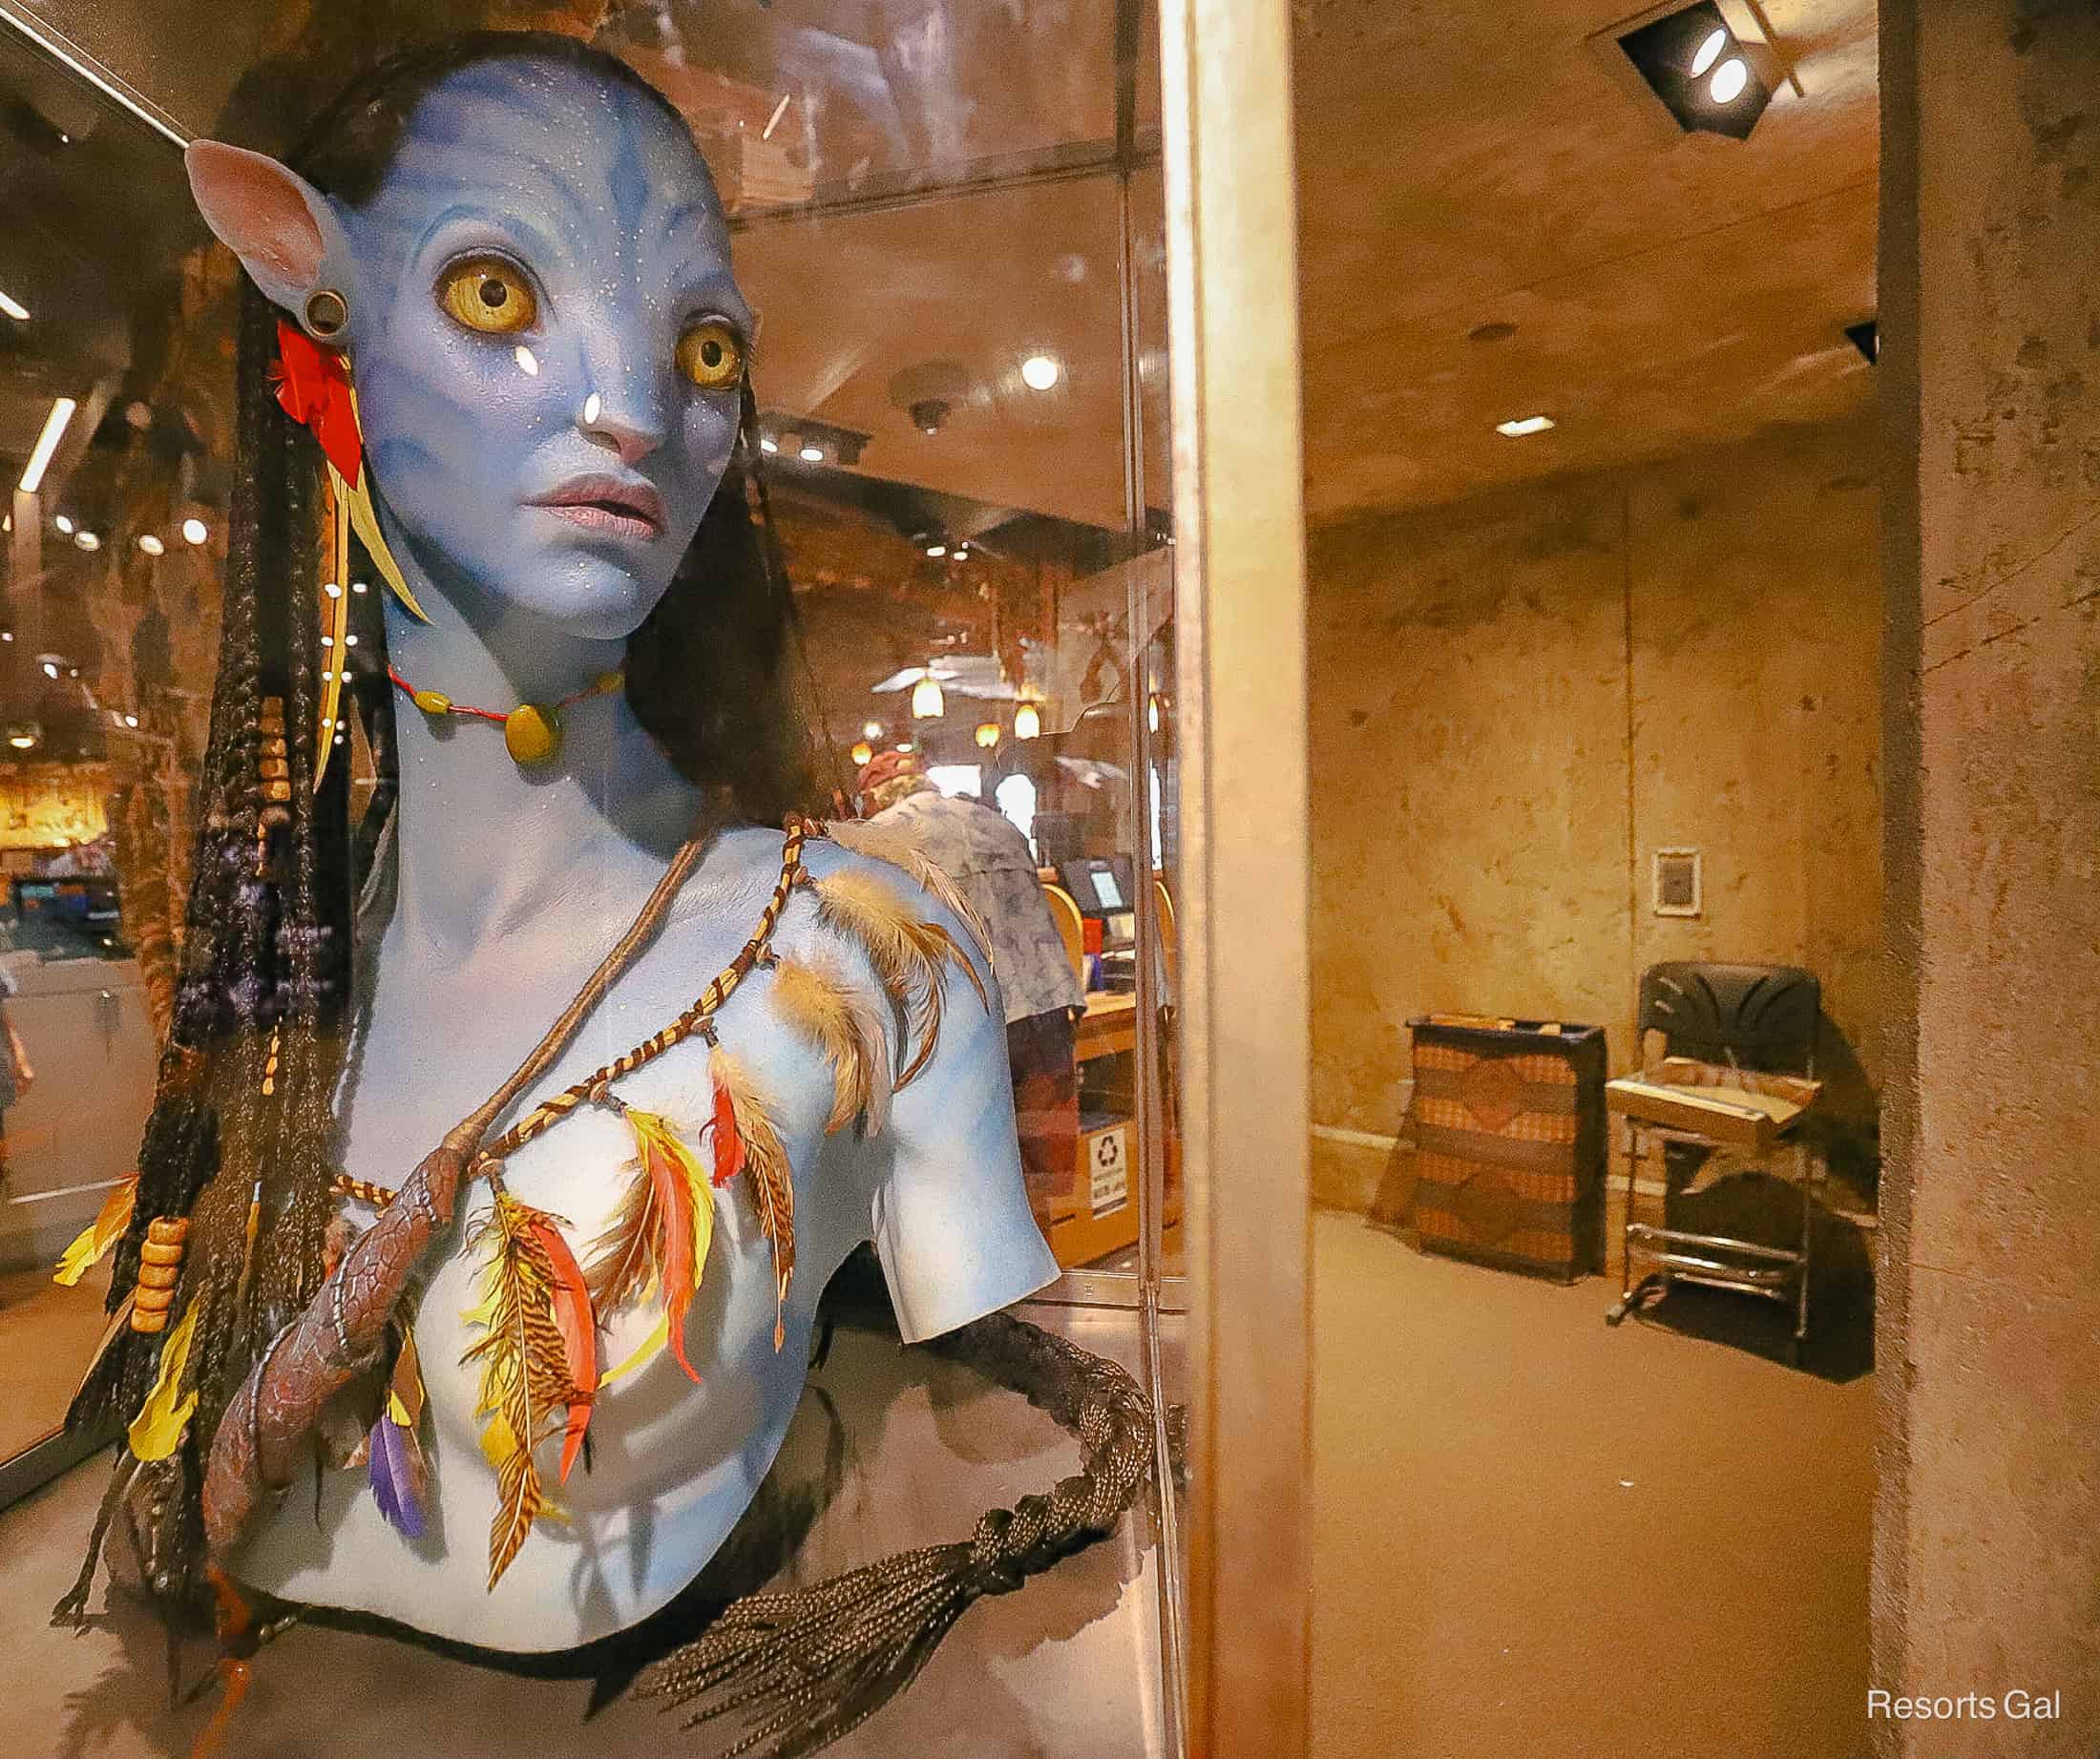 Avatar Flight of Passage at Disney’s Animal Kingdom (A Resorts Gal Ride Guide)